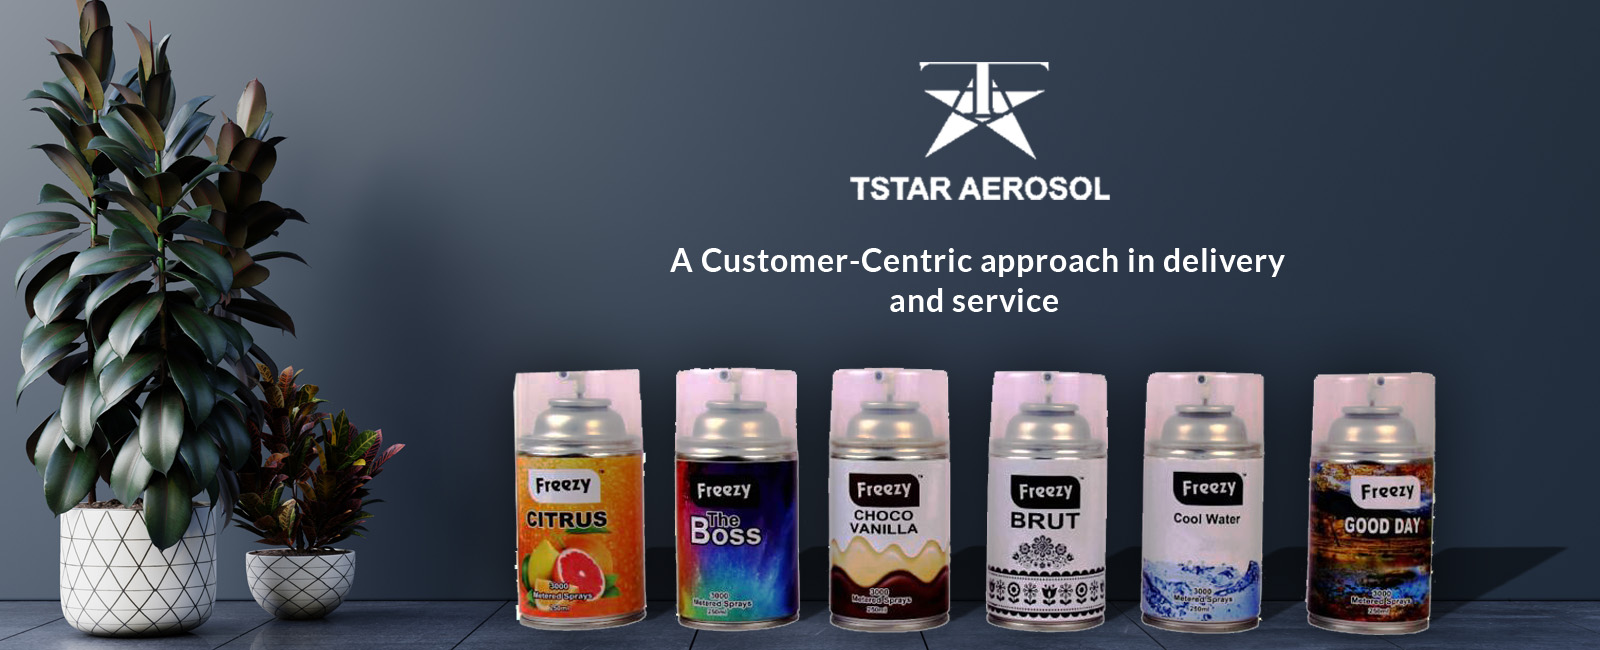 tstar aerosol suppliers